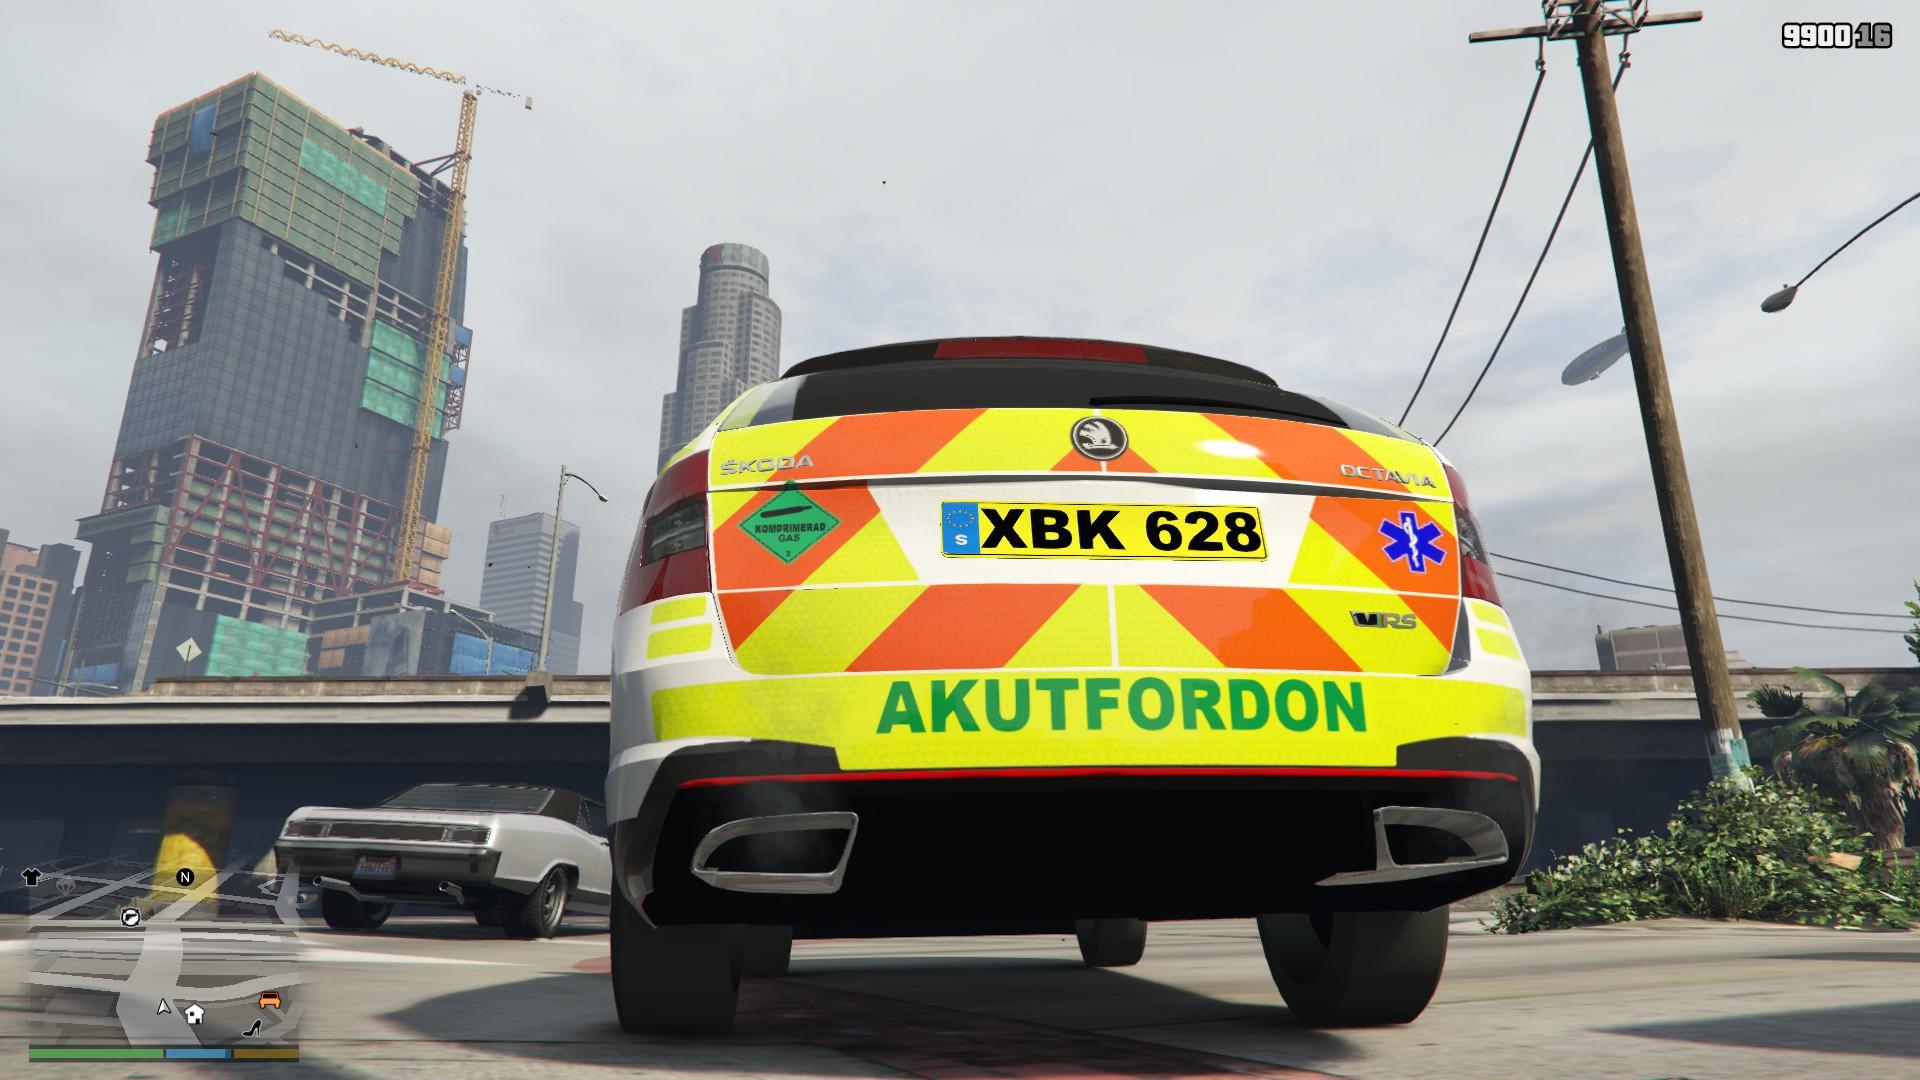 Swedish emergency vehicle EMS GTA5 Mods com